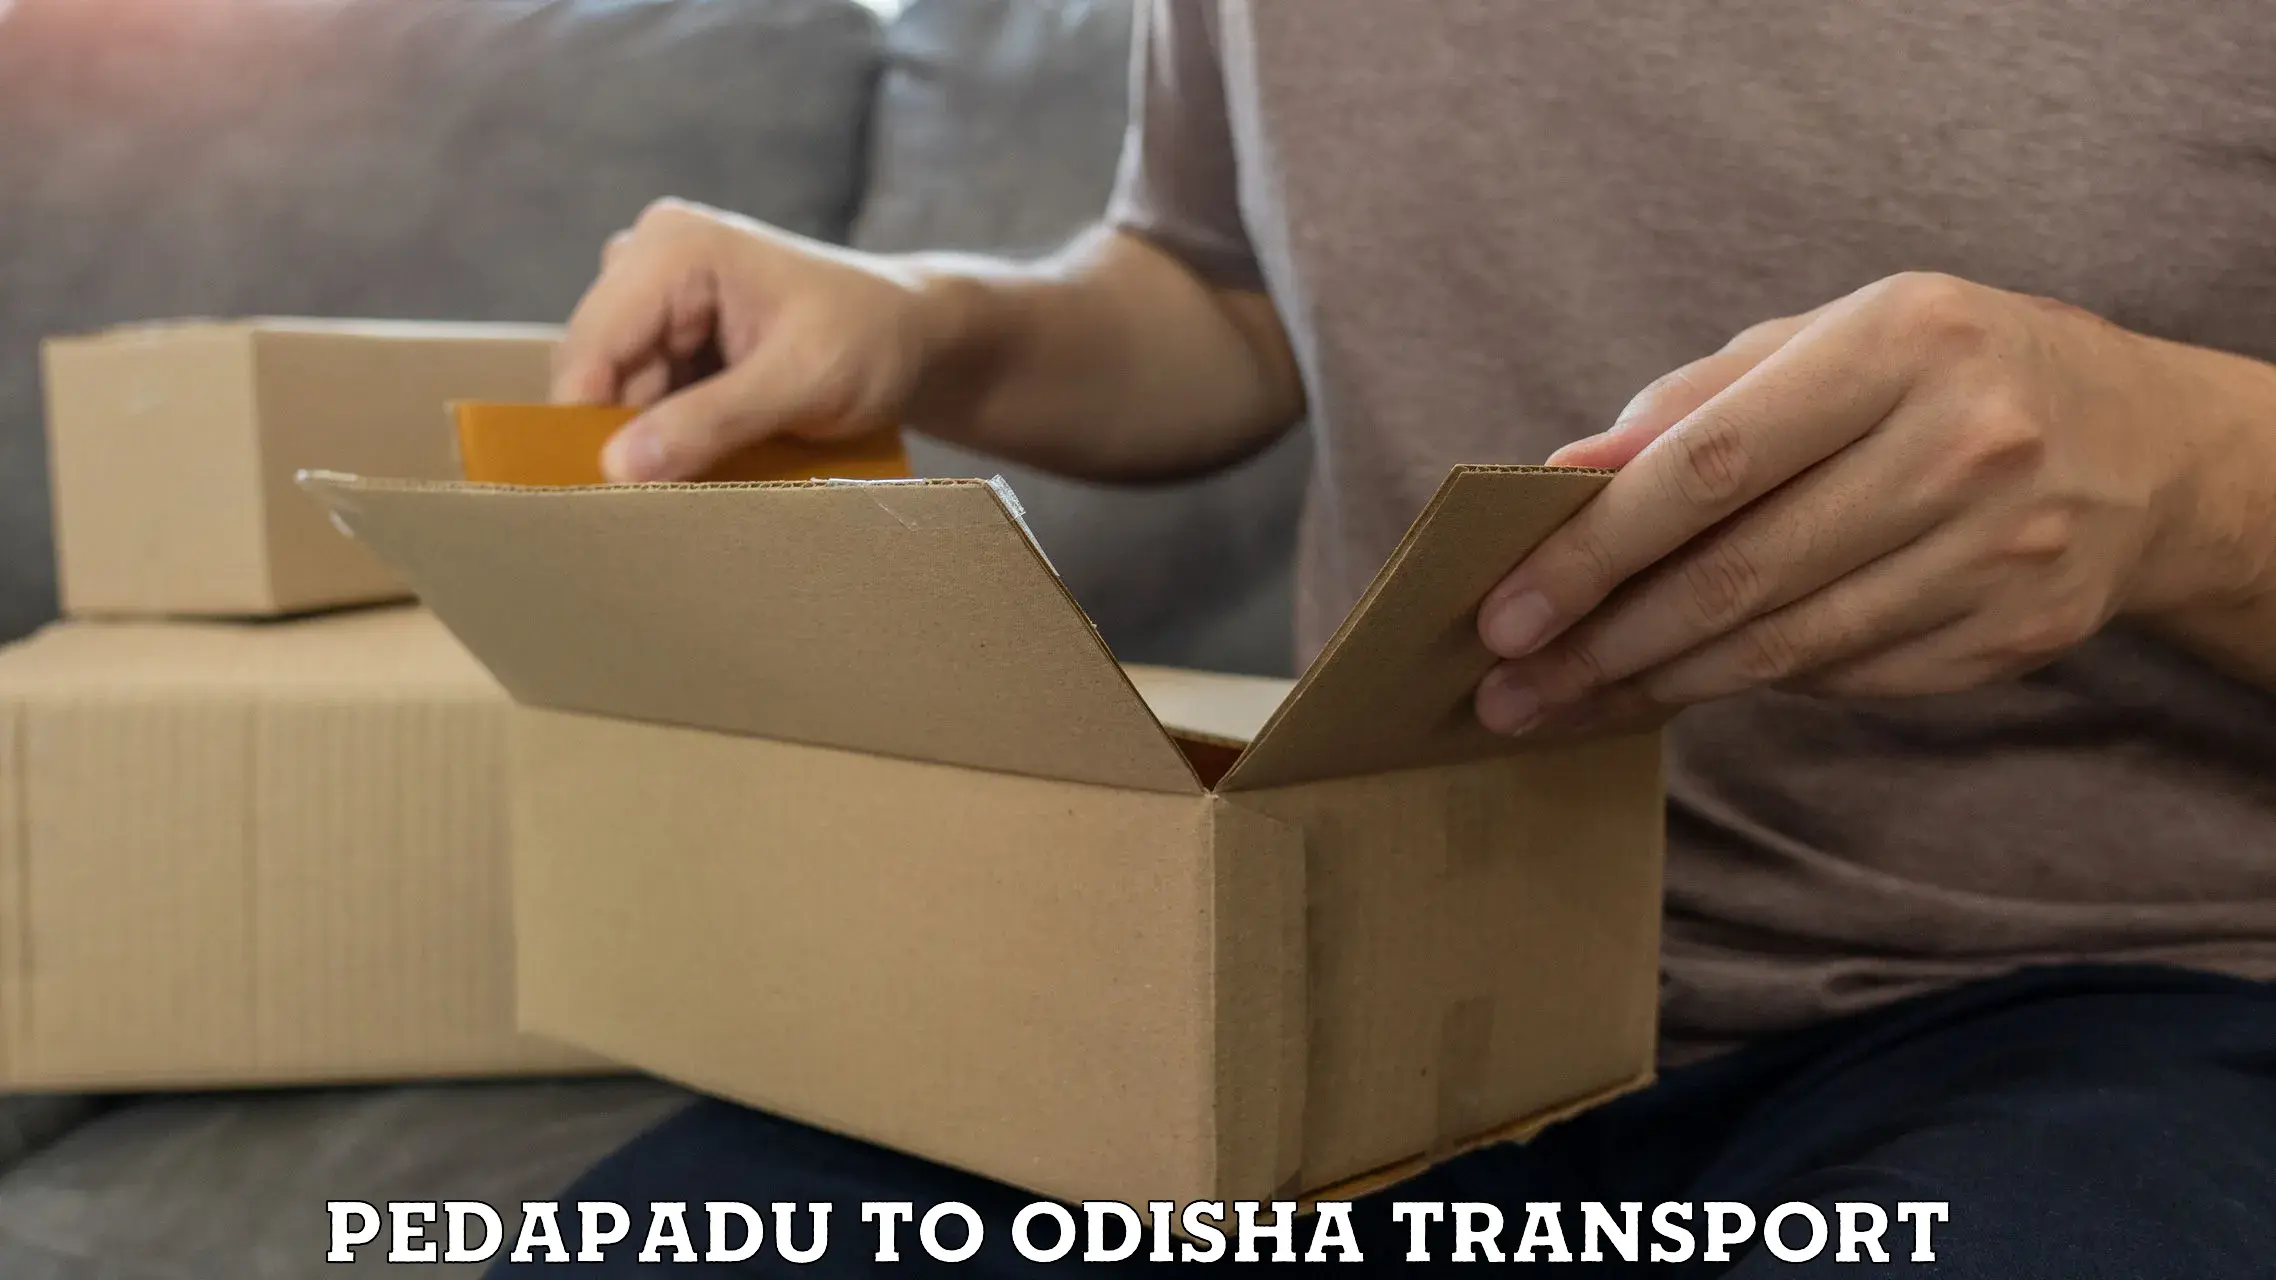 Transport in sharing in Pedapadu to Dandisahi